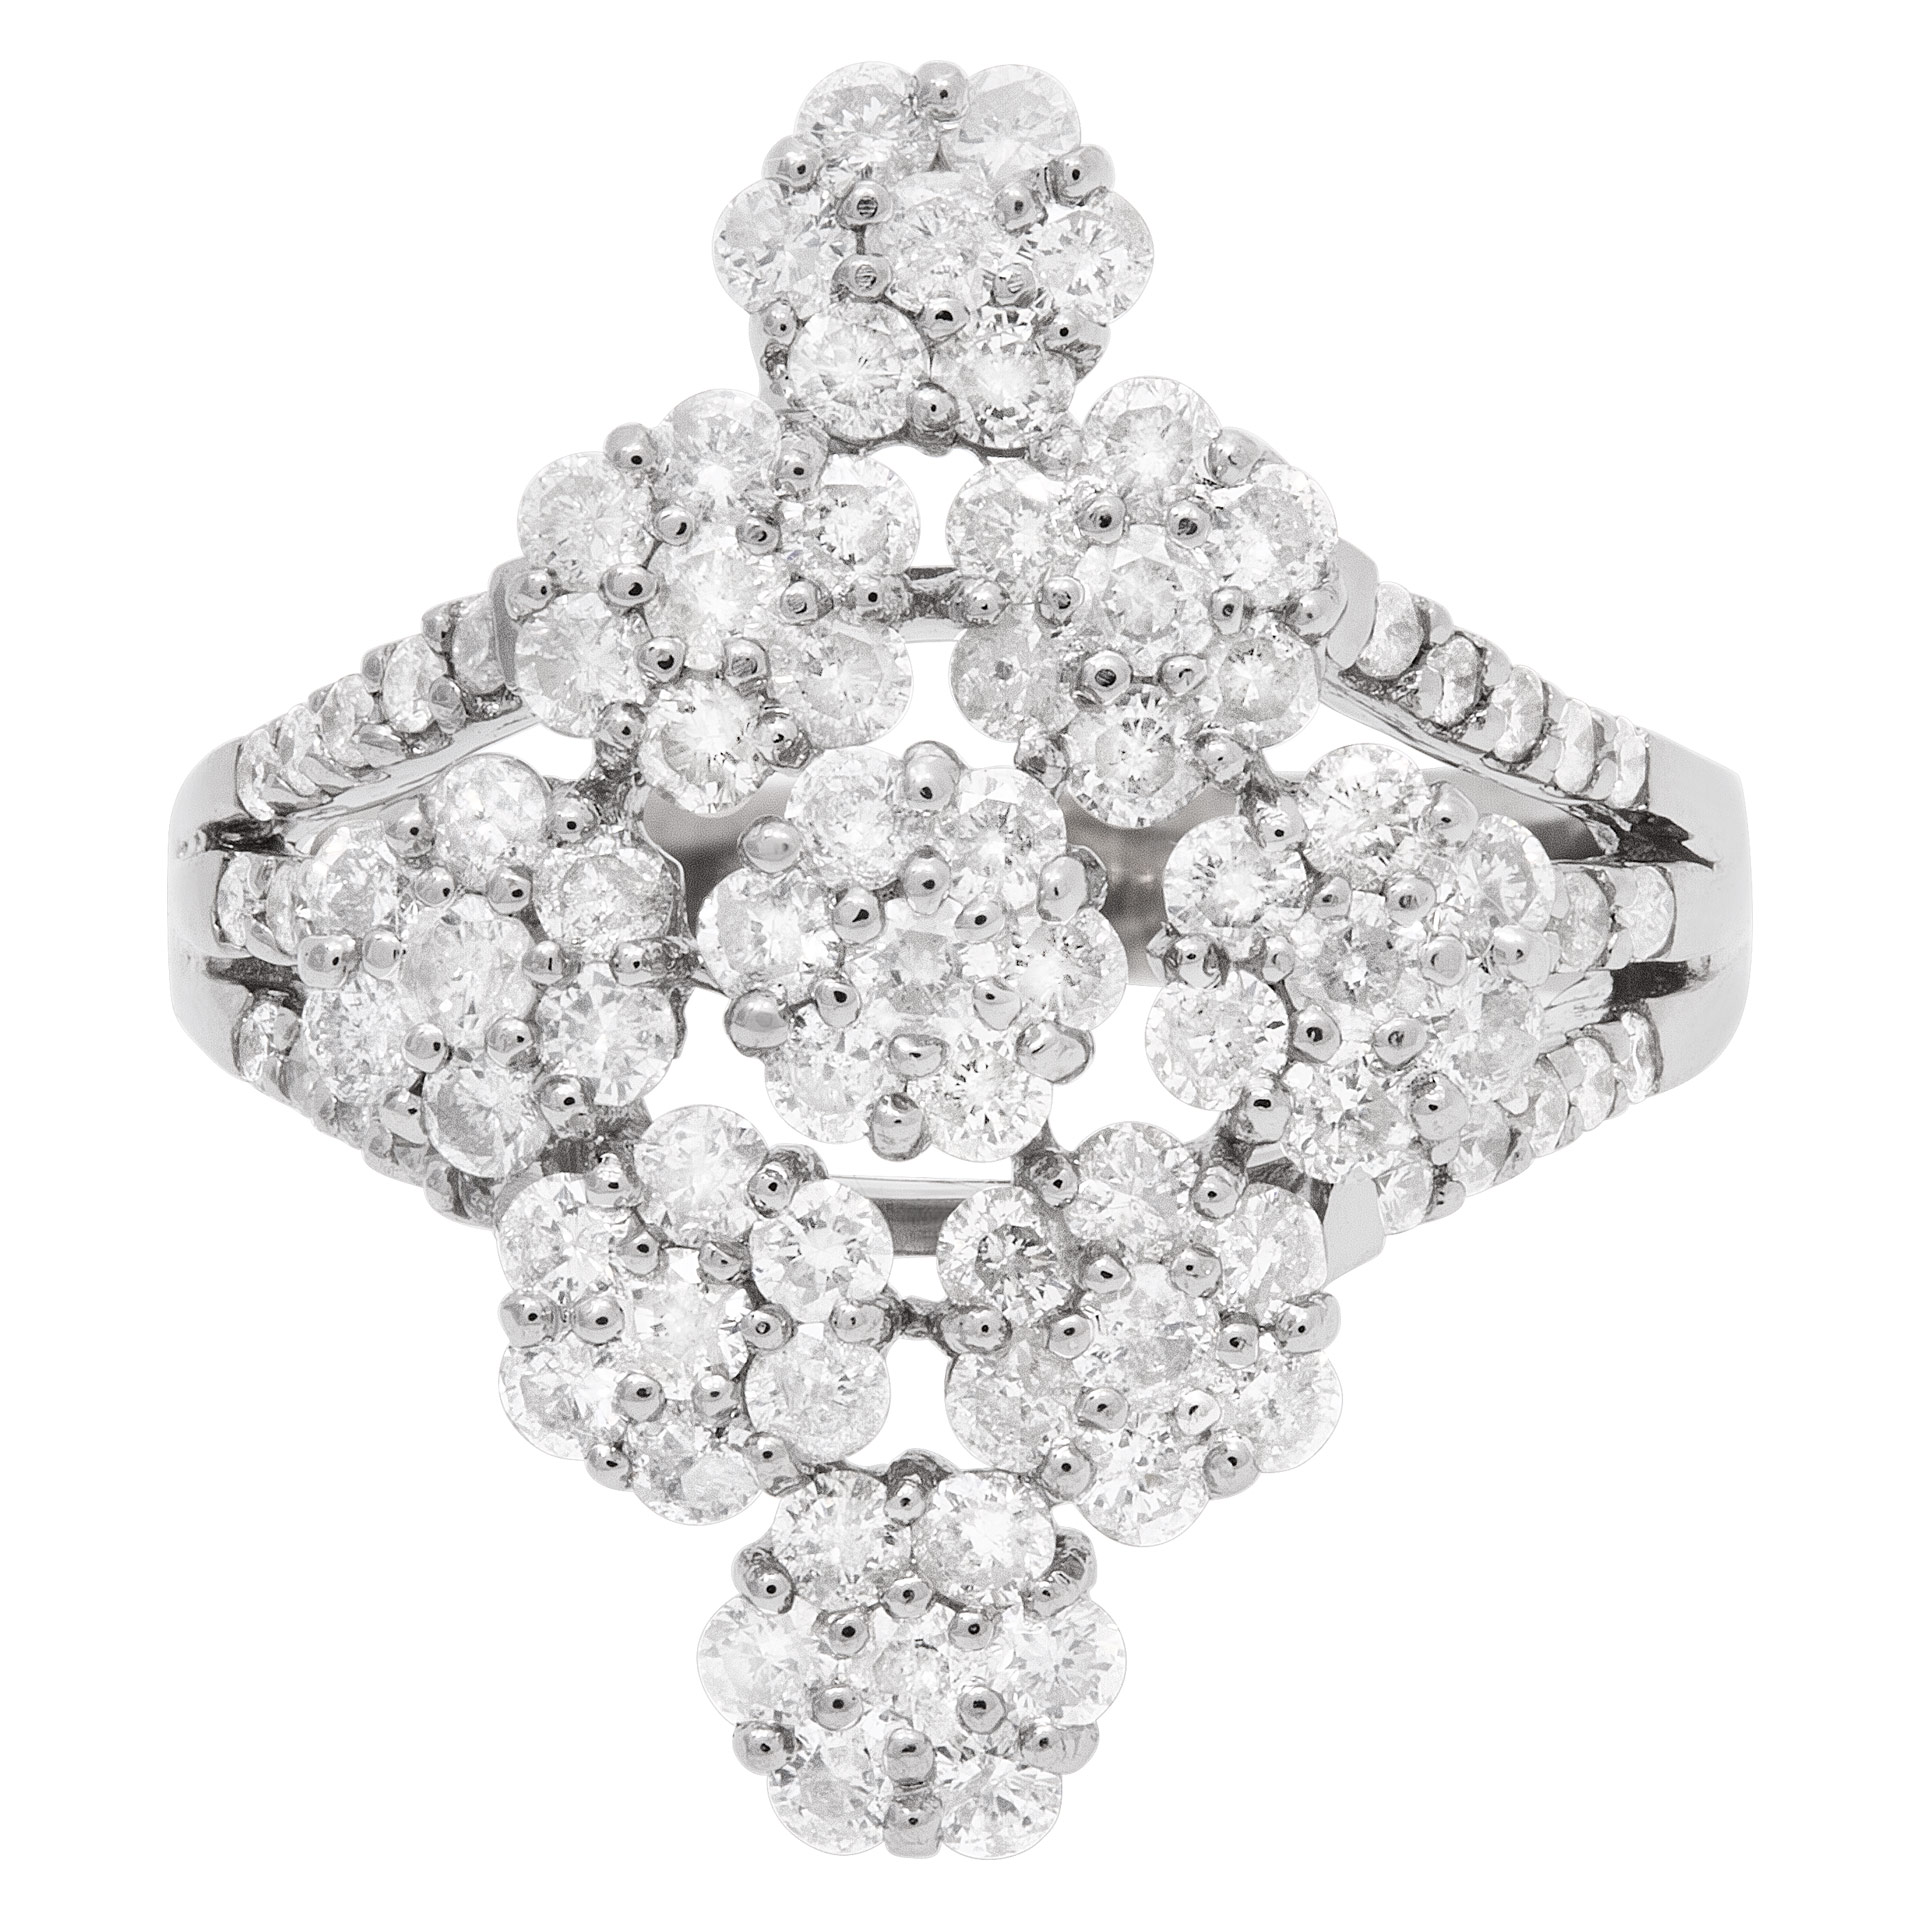 Elegant diamond flower ring with over 1 carat in diamonds in 18k white gold